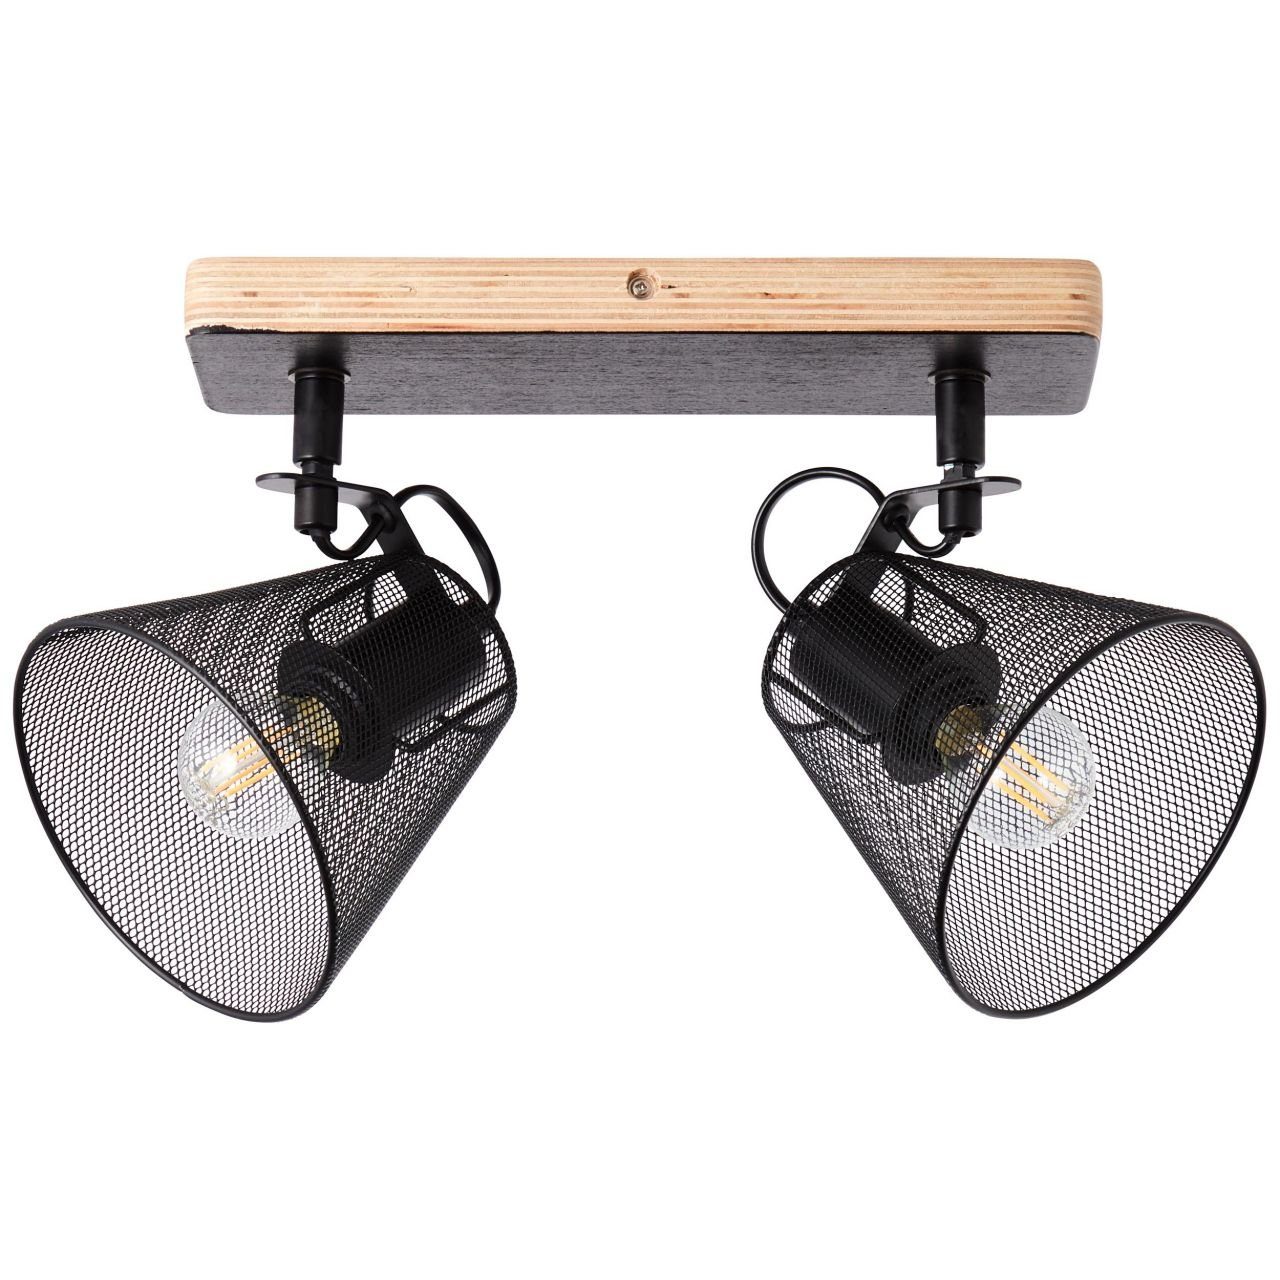 Brilliant Spotbalken 2flg Lampe, 2x Deckenleuchte Metall/Holz, Whole Whole, D45 schwarz/holzfarbend,